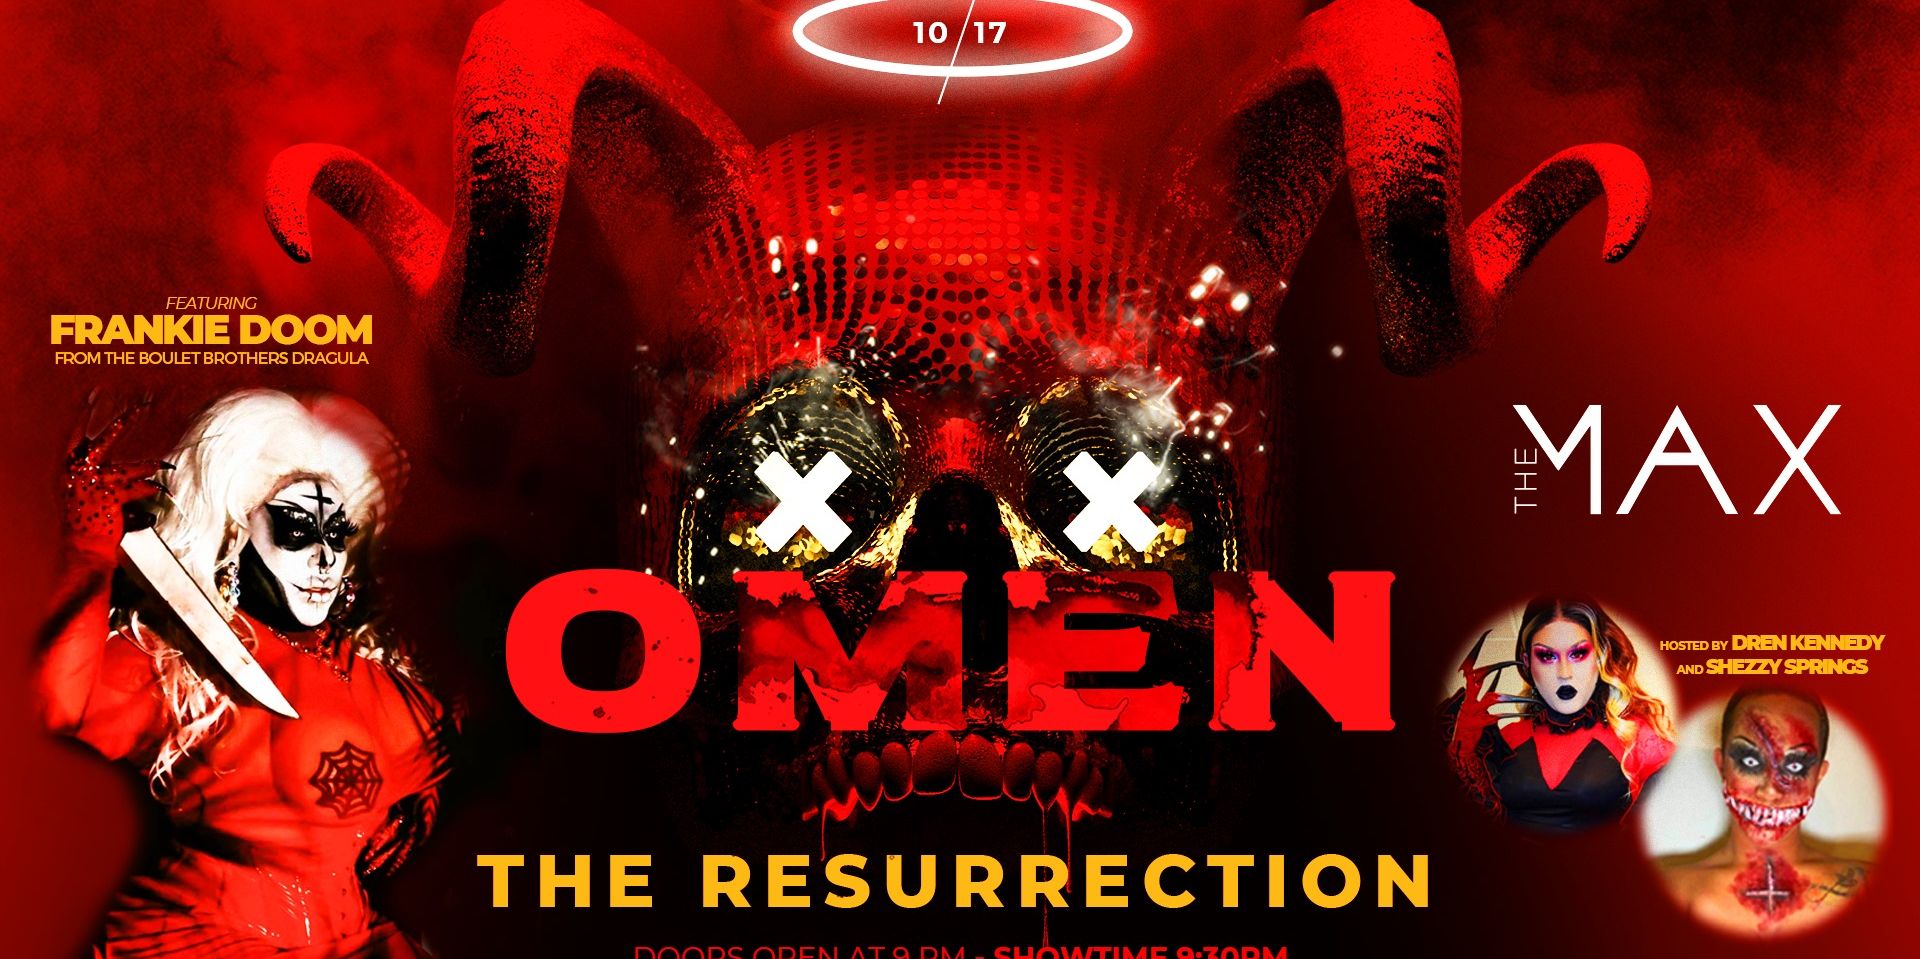 Omen Pt II: The Resurrection promotional image